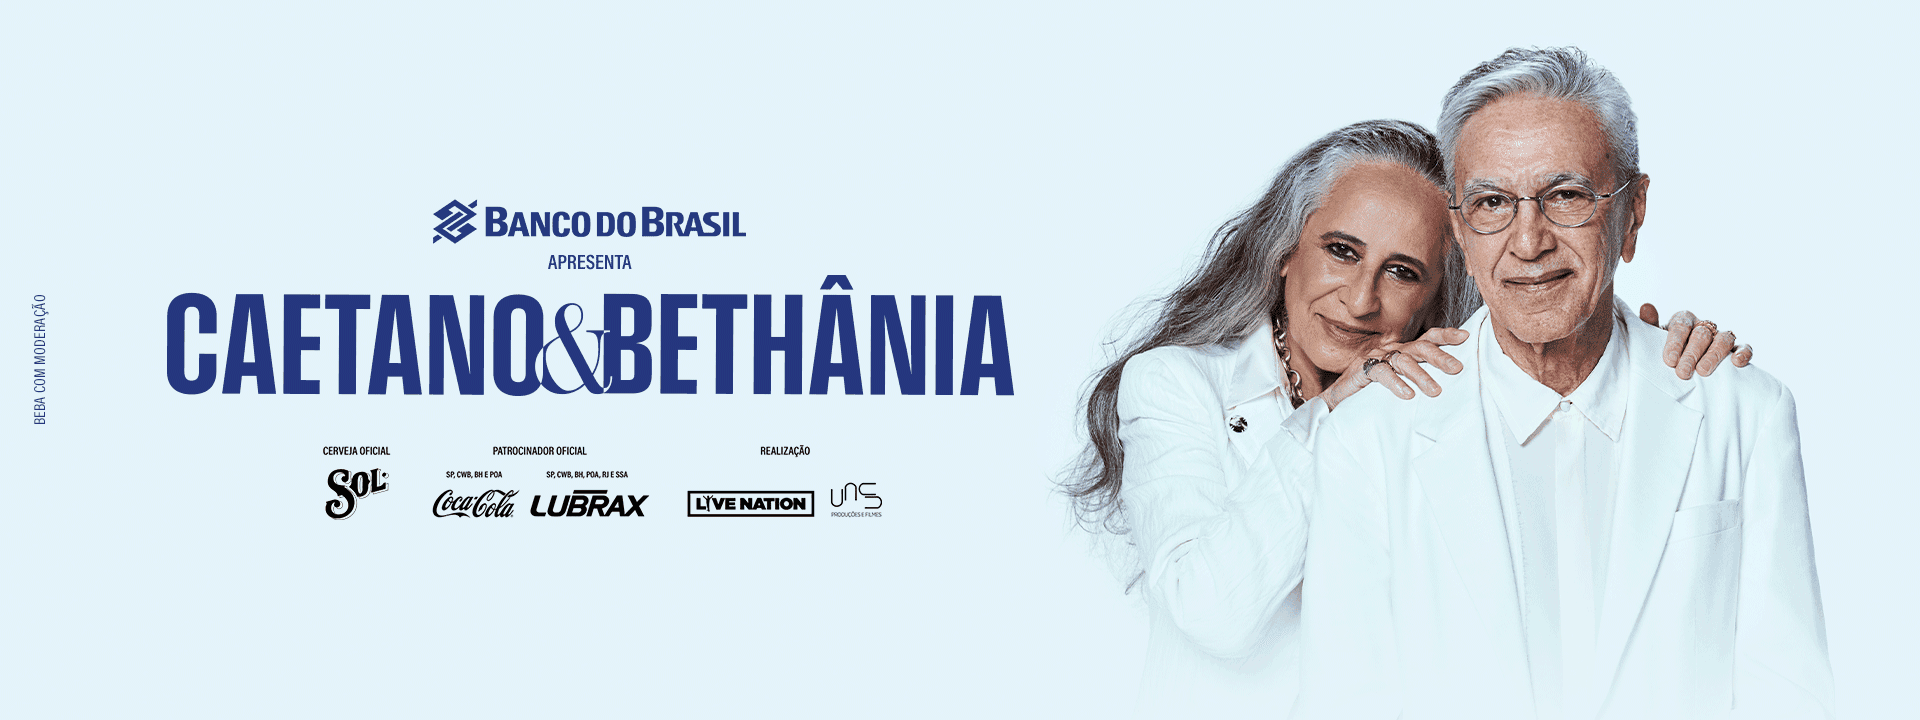 Caetano & Bethânia - Curitiba